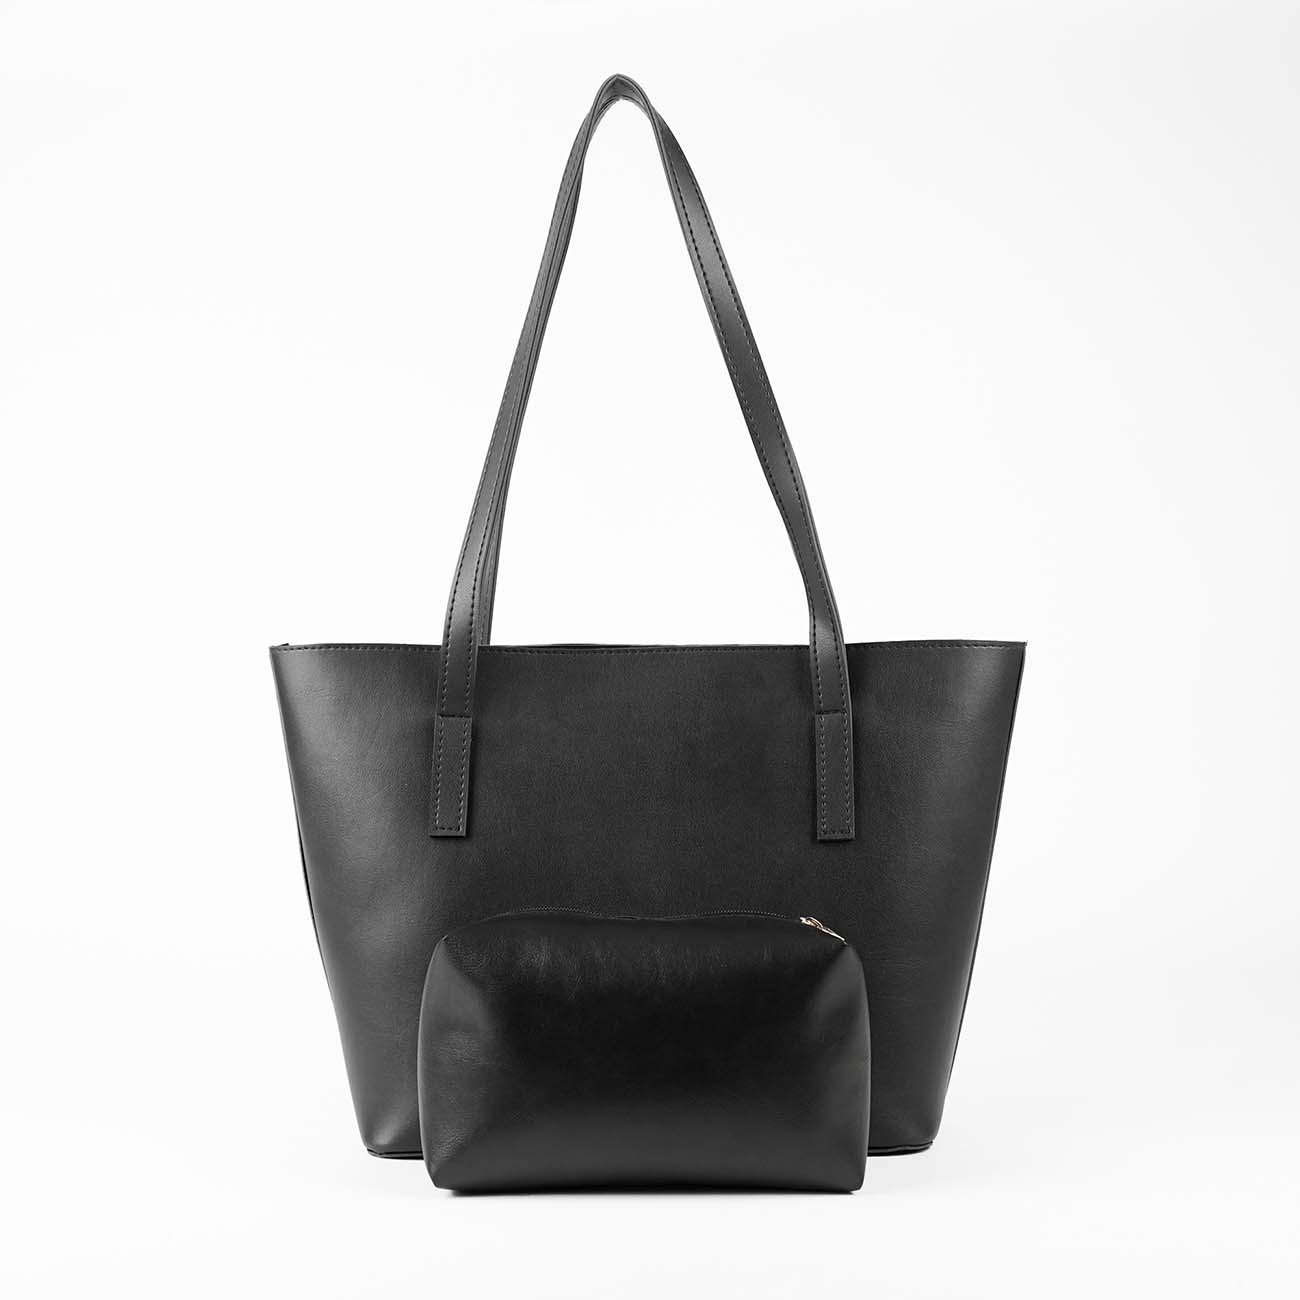 Carry tote set of 2 bag Black